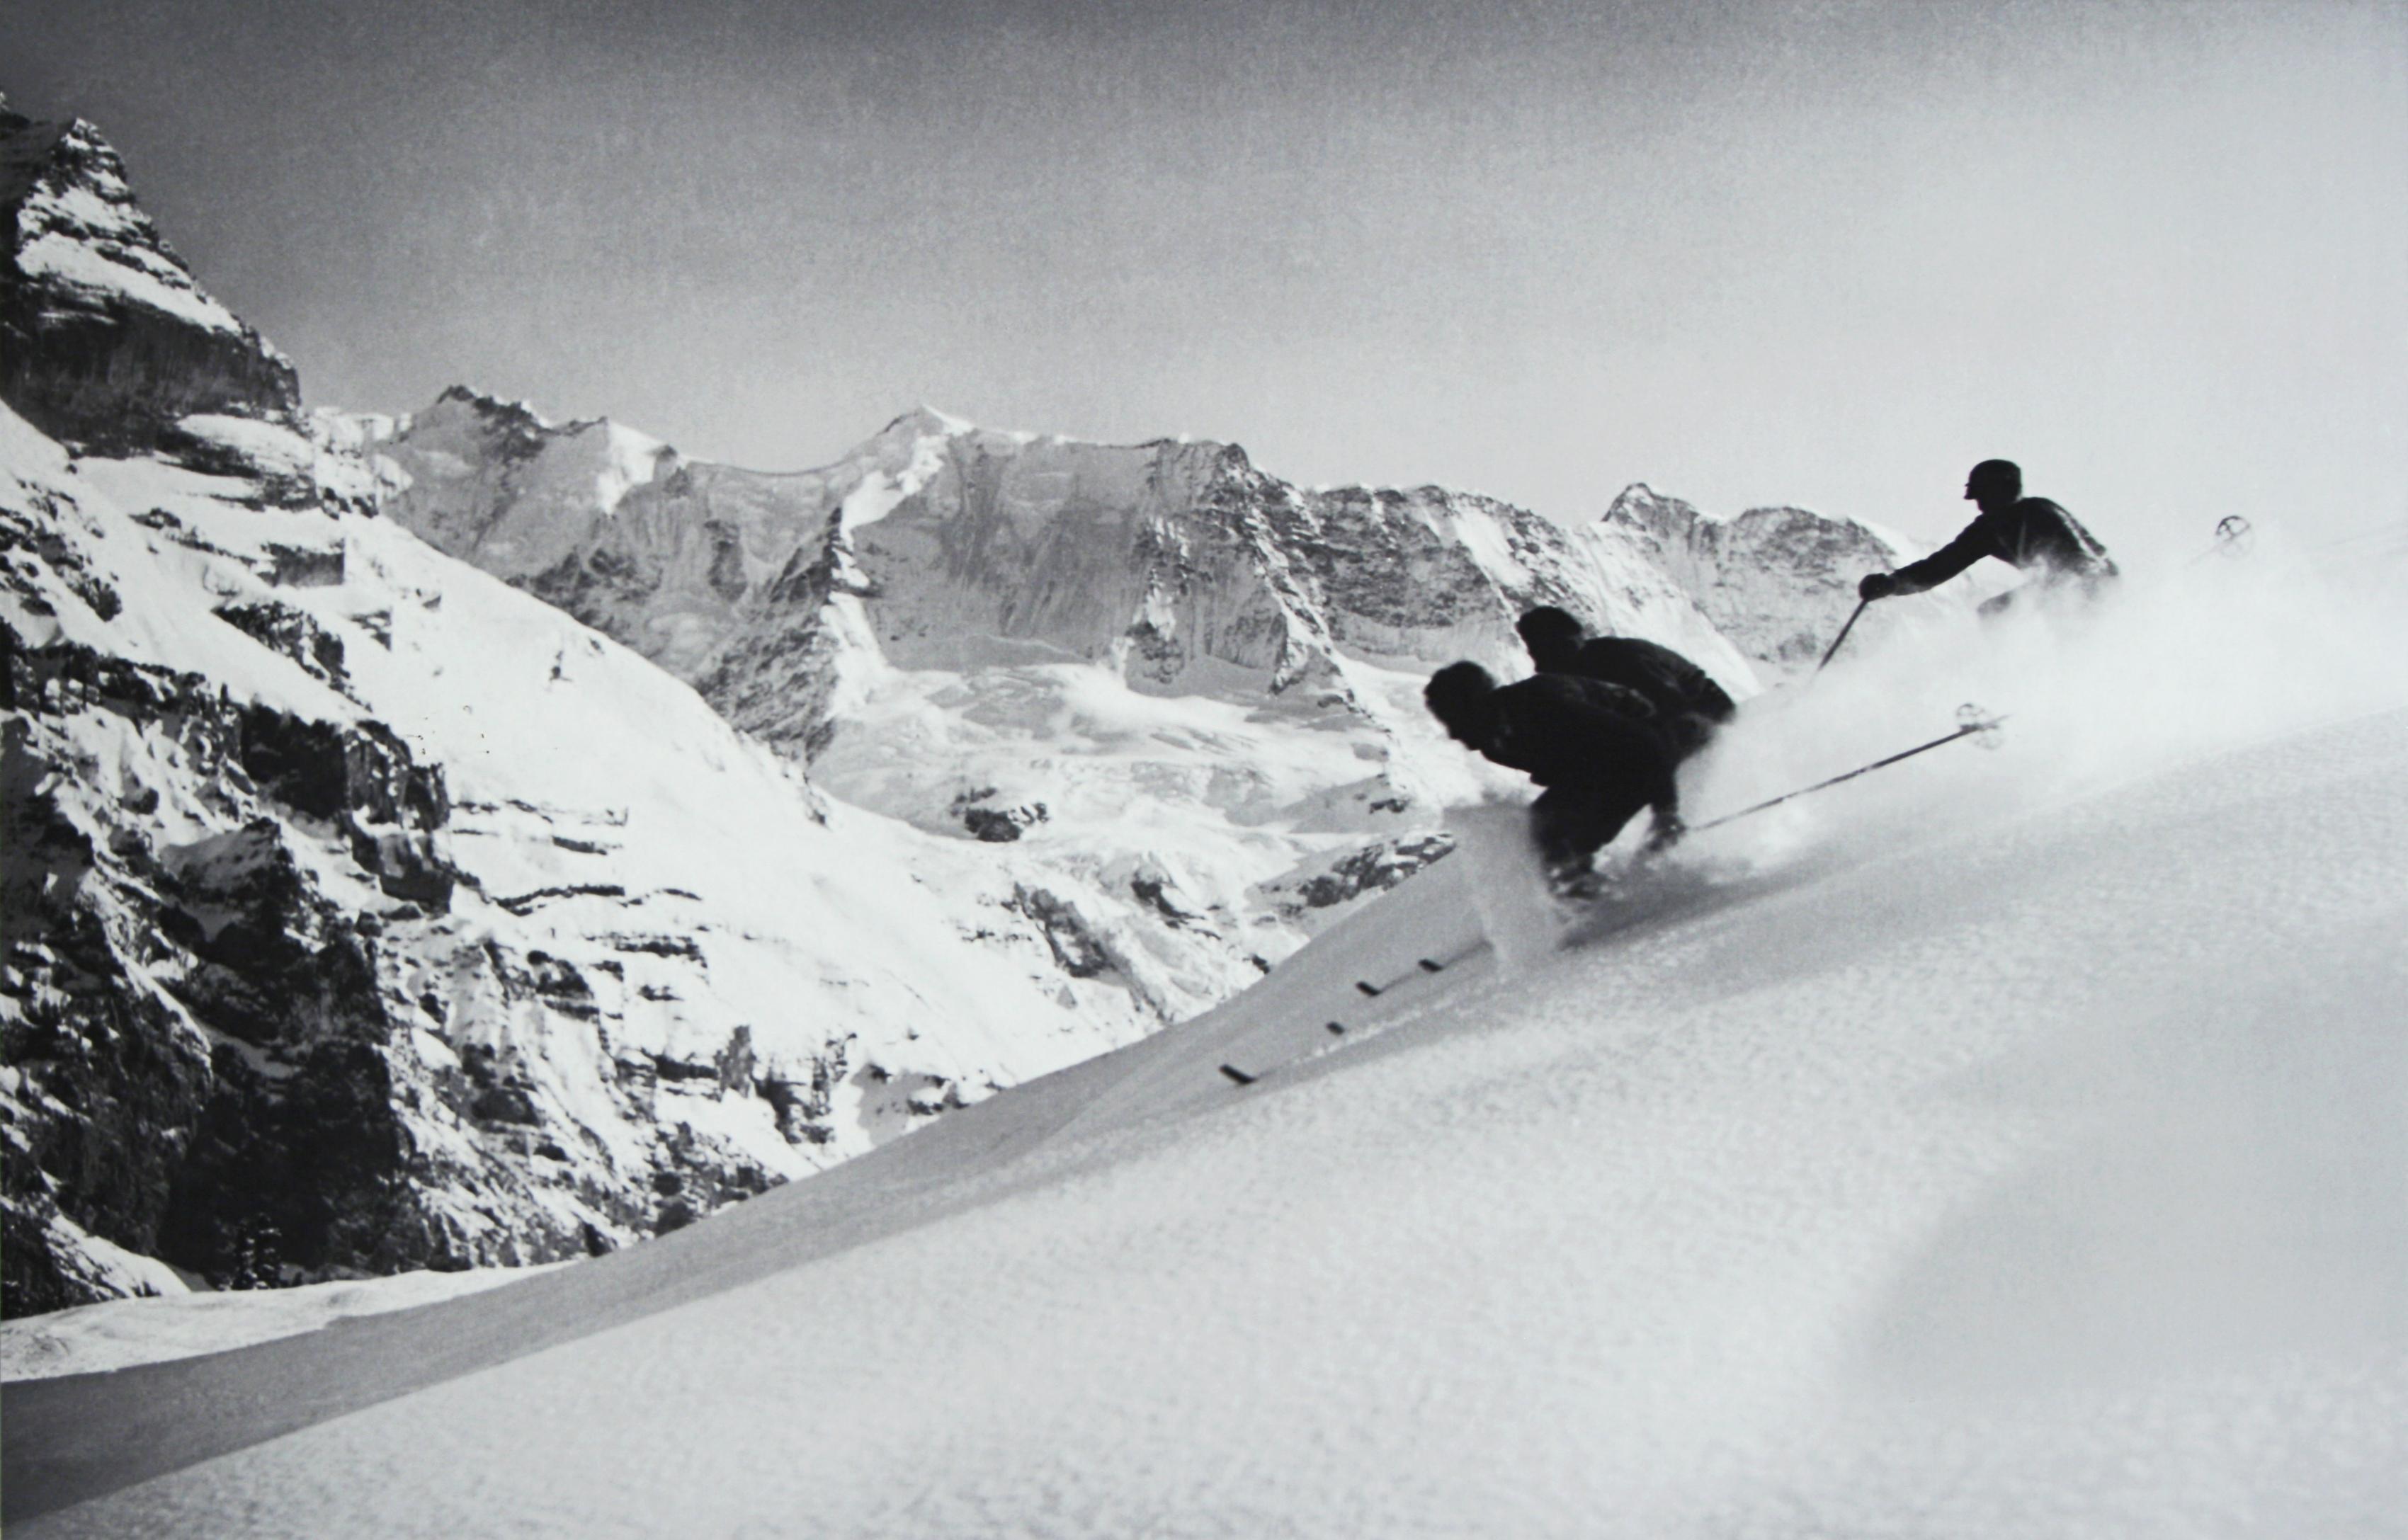 Photographie de ski alpin.
sCHUSS